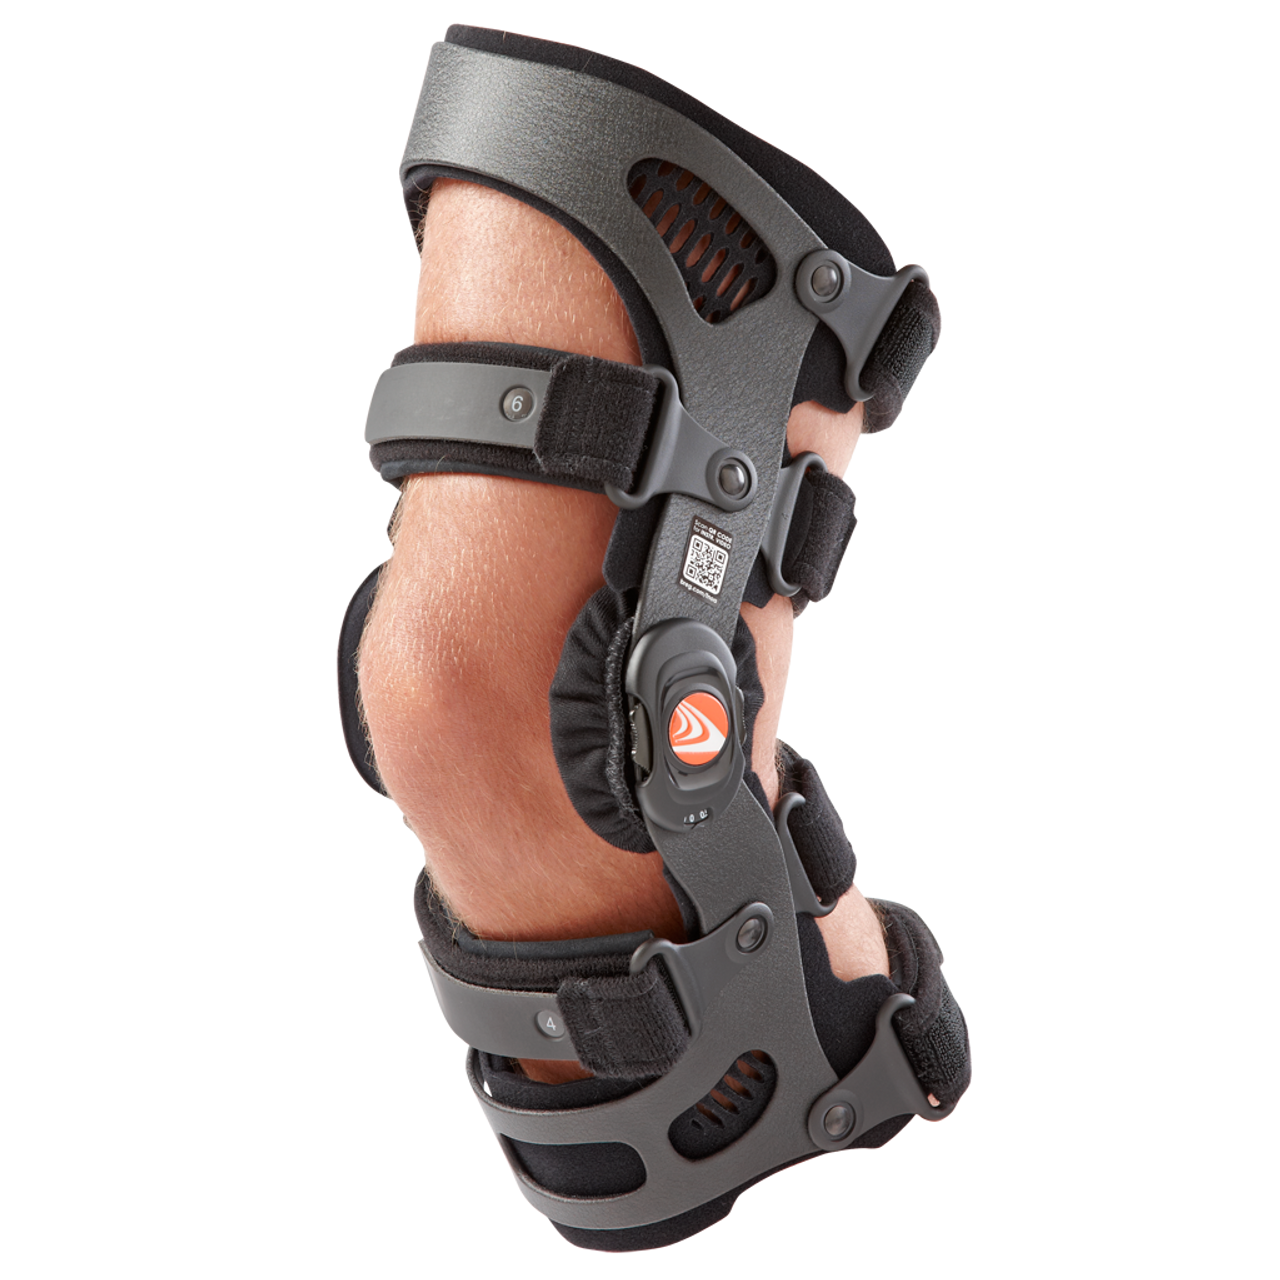 Breg Fusion Lateral OA Plus Knee Brace - Shop Our Rehabilitation